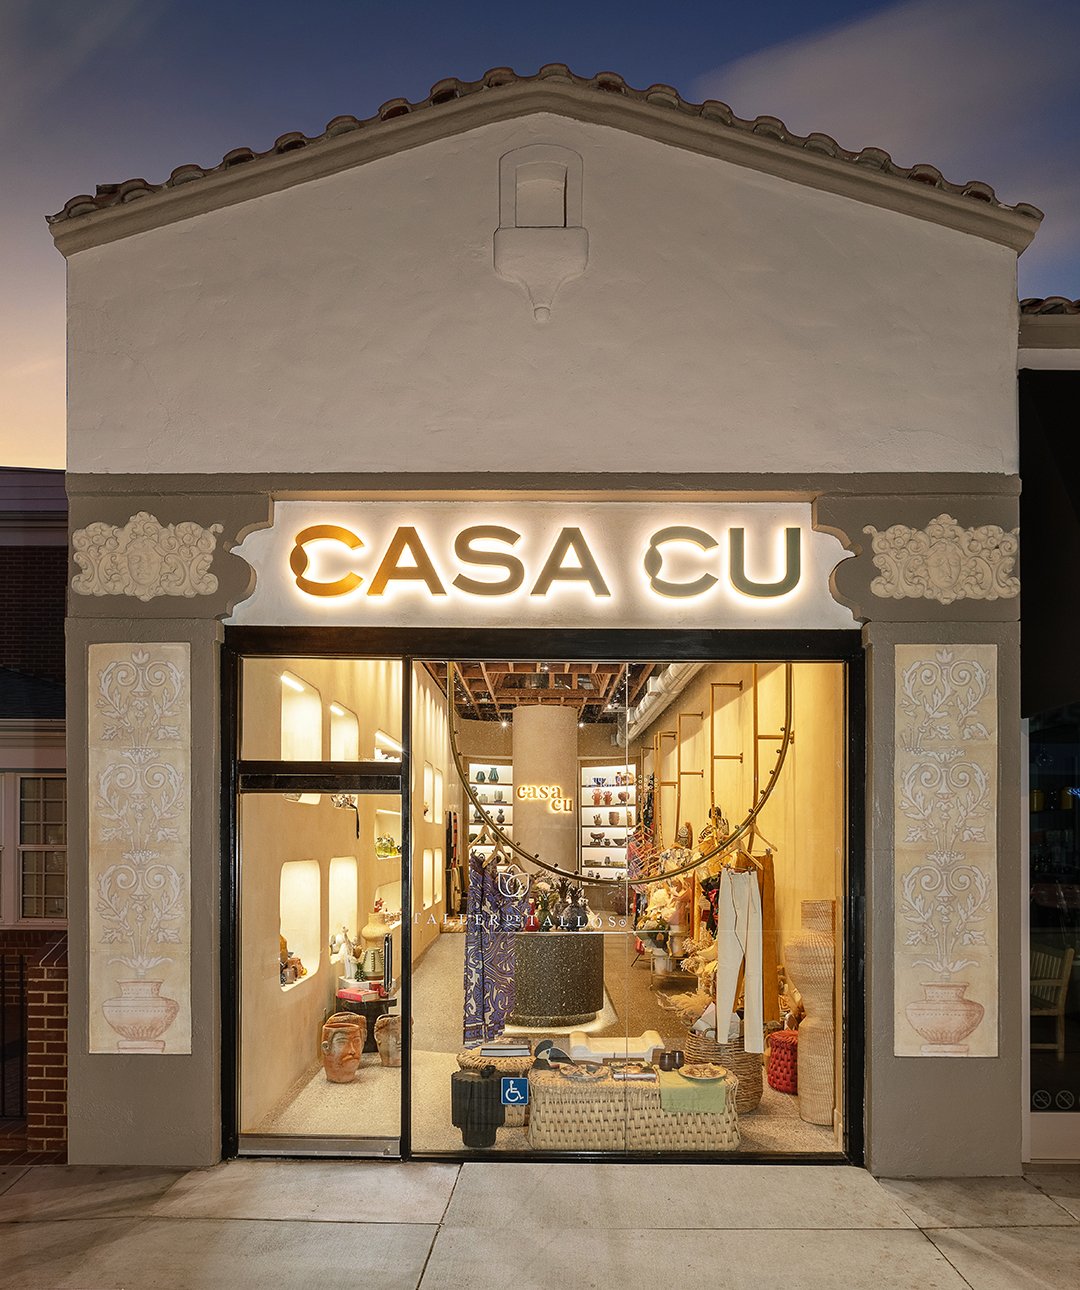 Casa Cu concept store LA Branding identity design by Caracter Studio 1.jpg